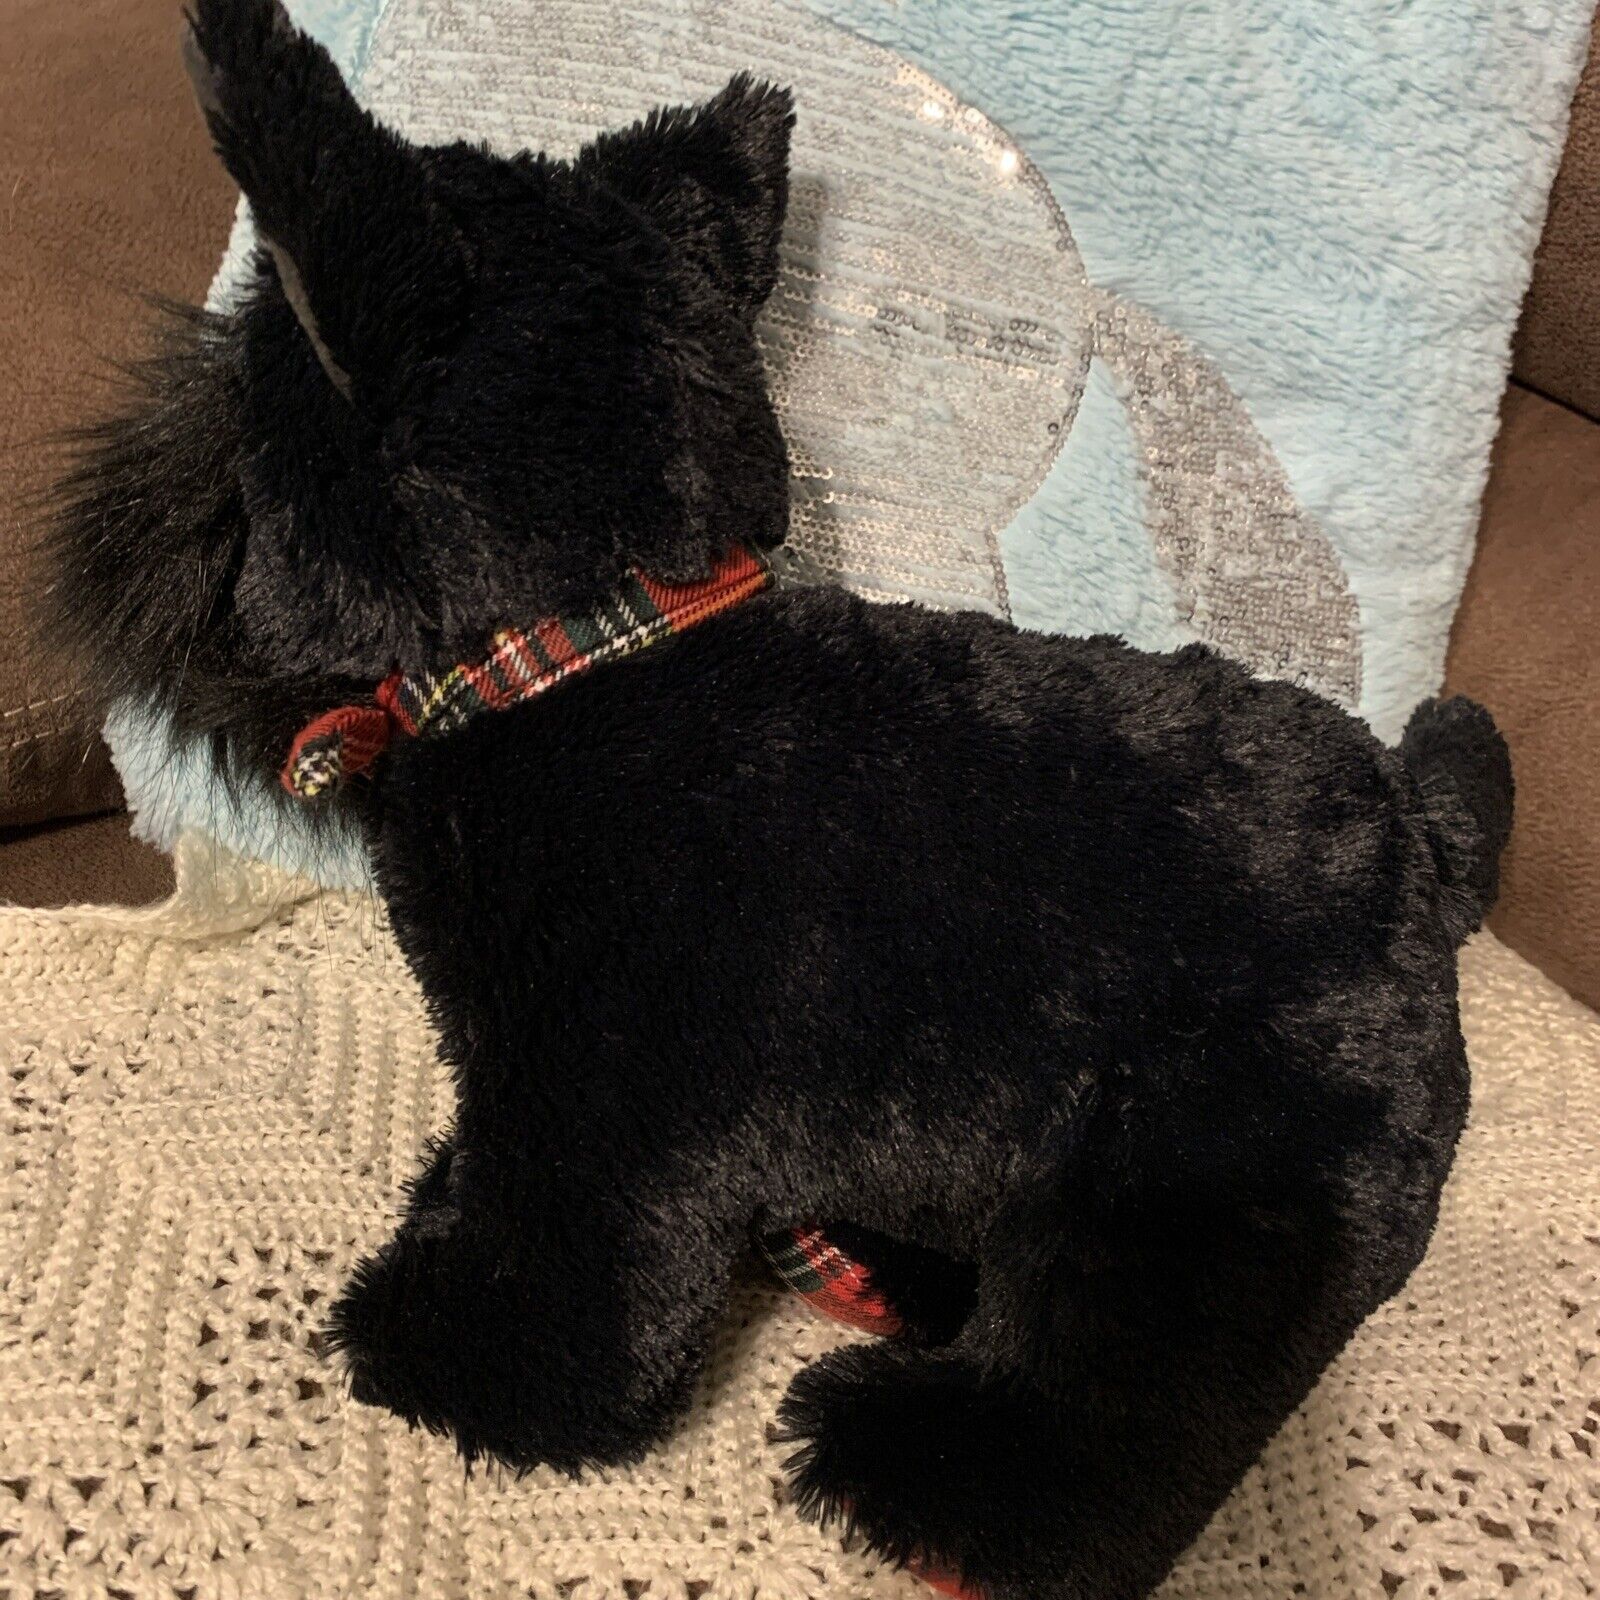 PIER 1 IMPORTS - Black Scottie Dog STUFFED ANIMAL Plush TOY w/ Red Plaid Paws